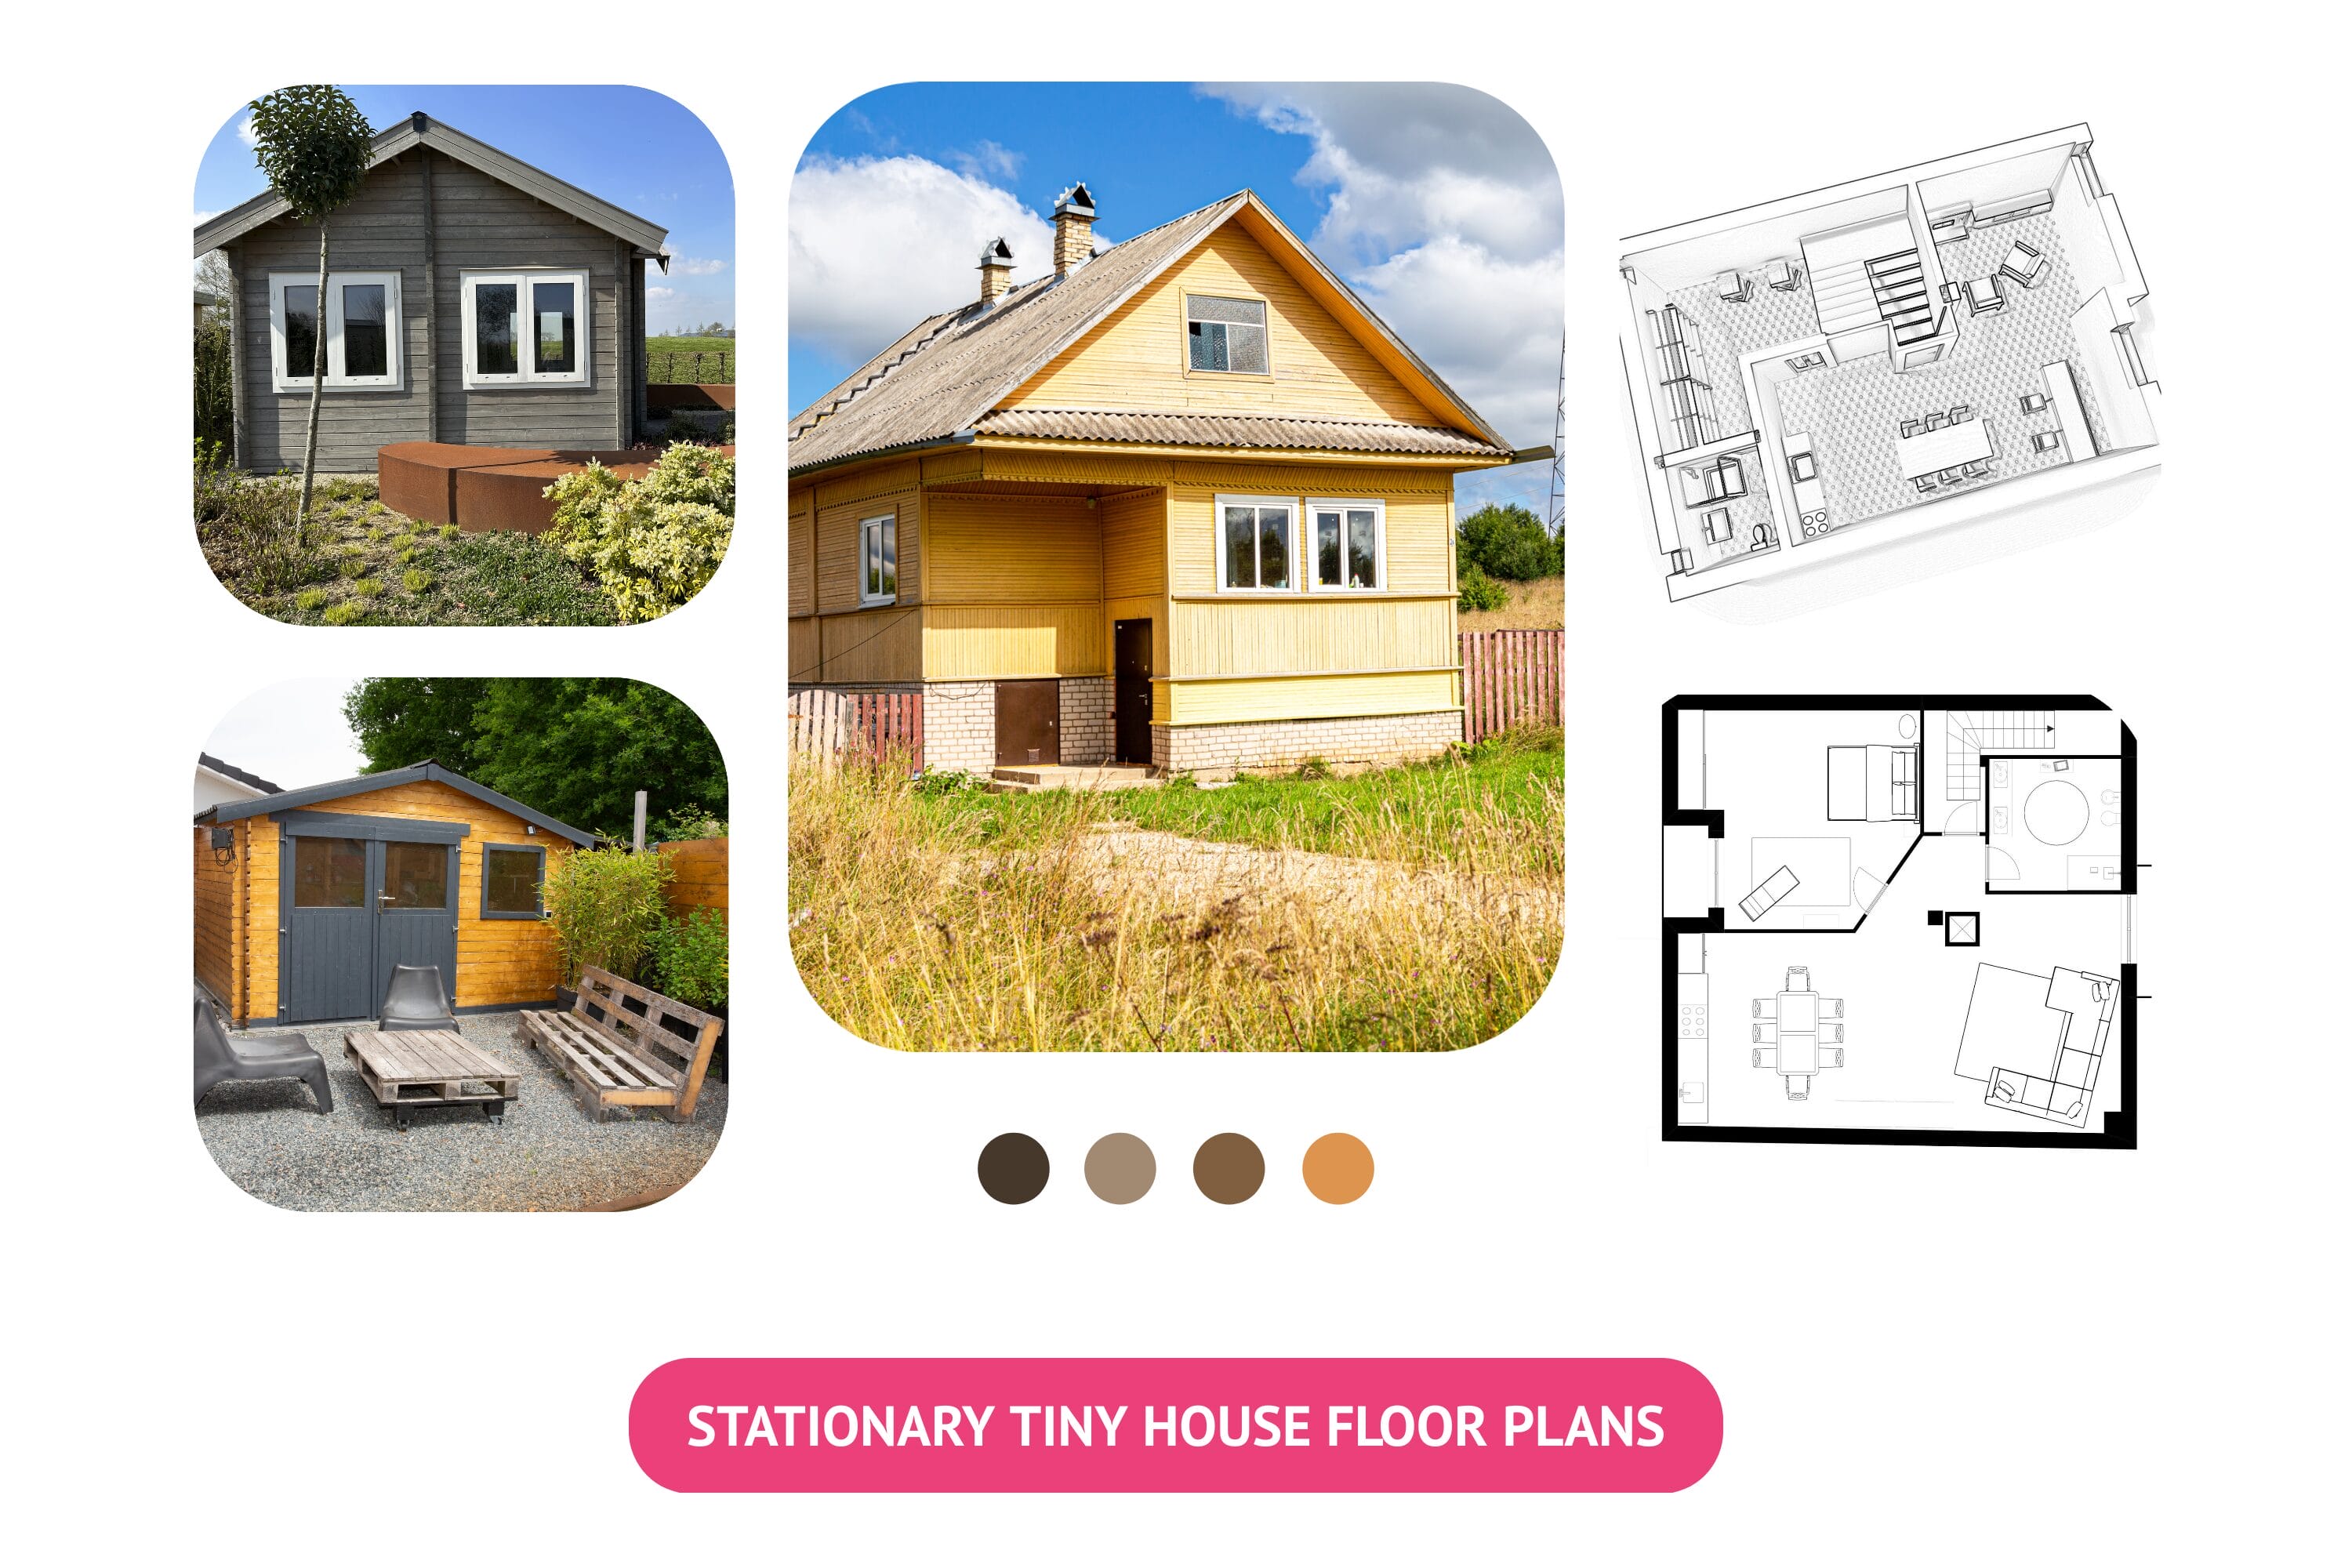 Stationary Tiny House Floor Plans